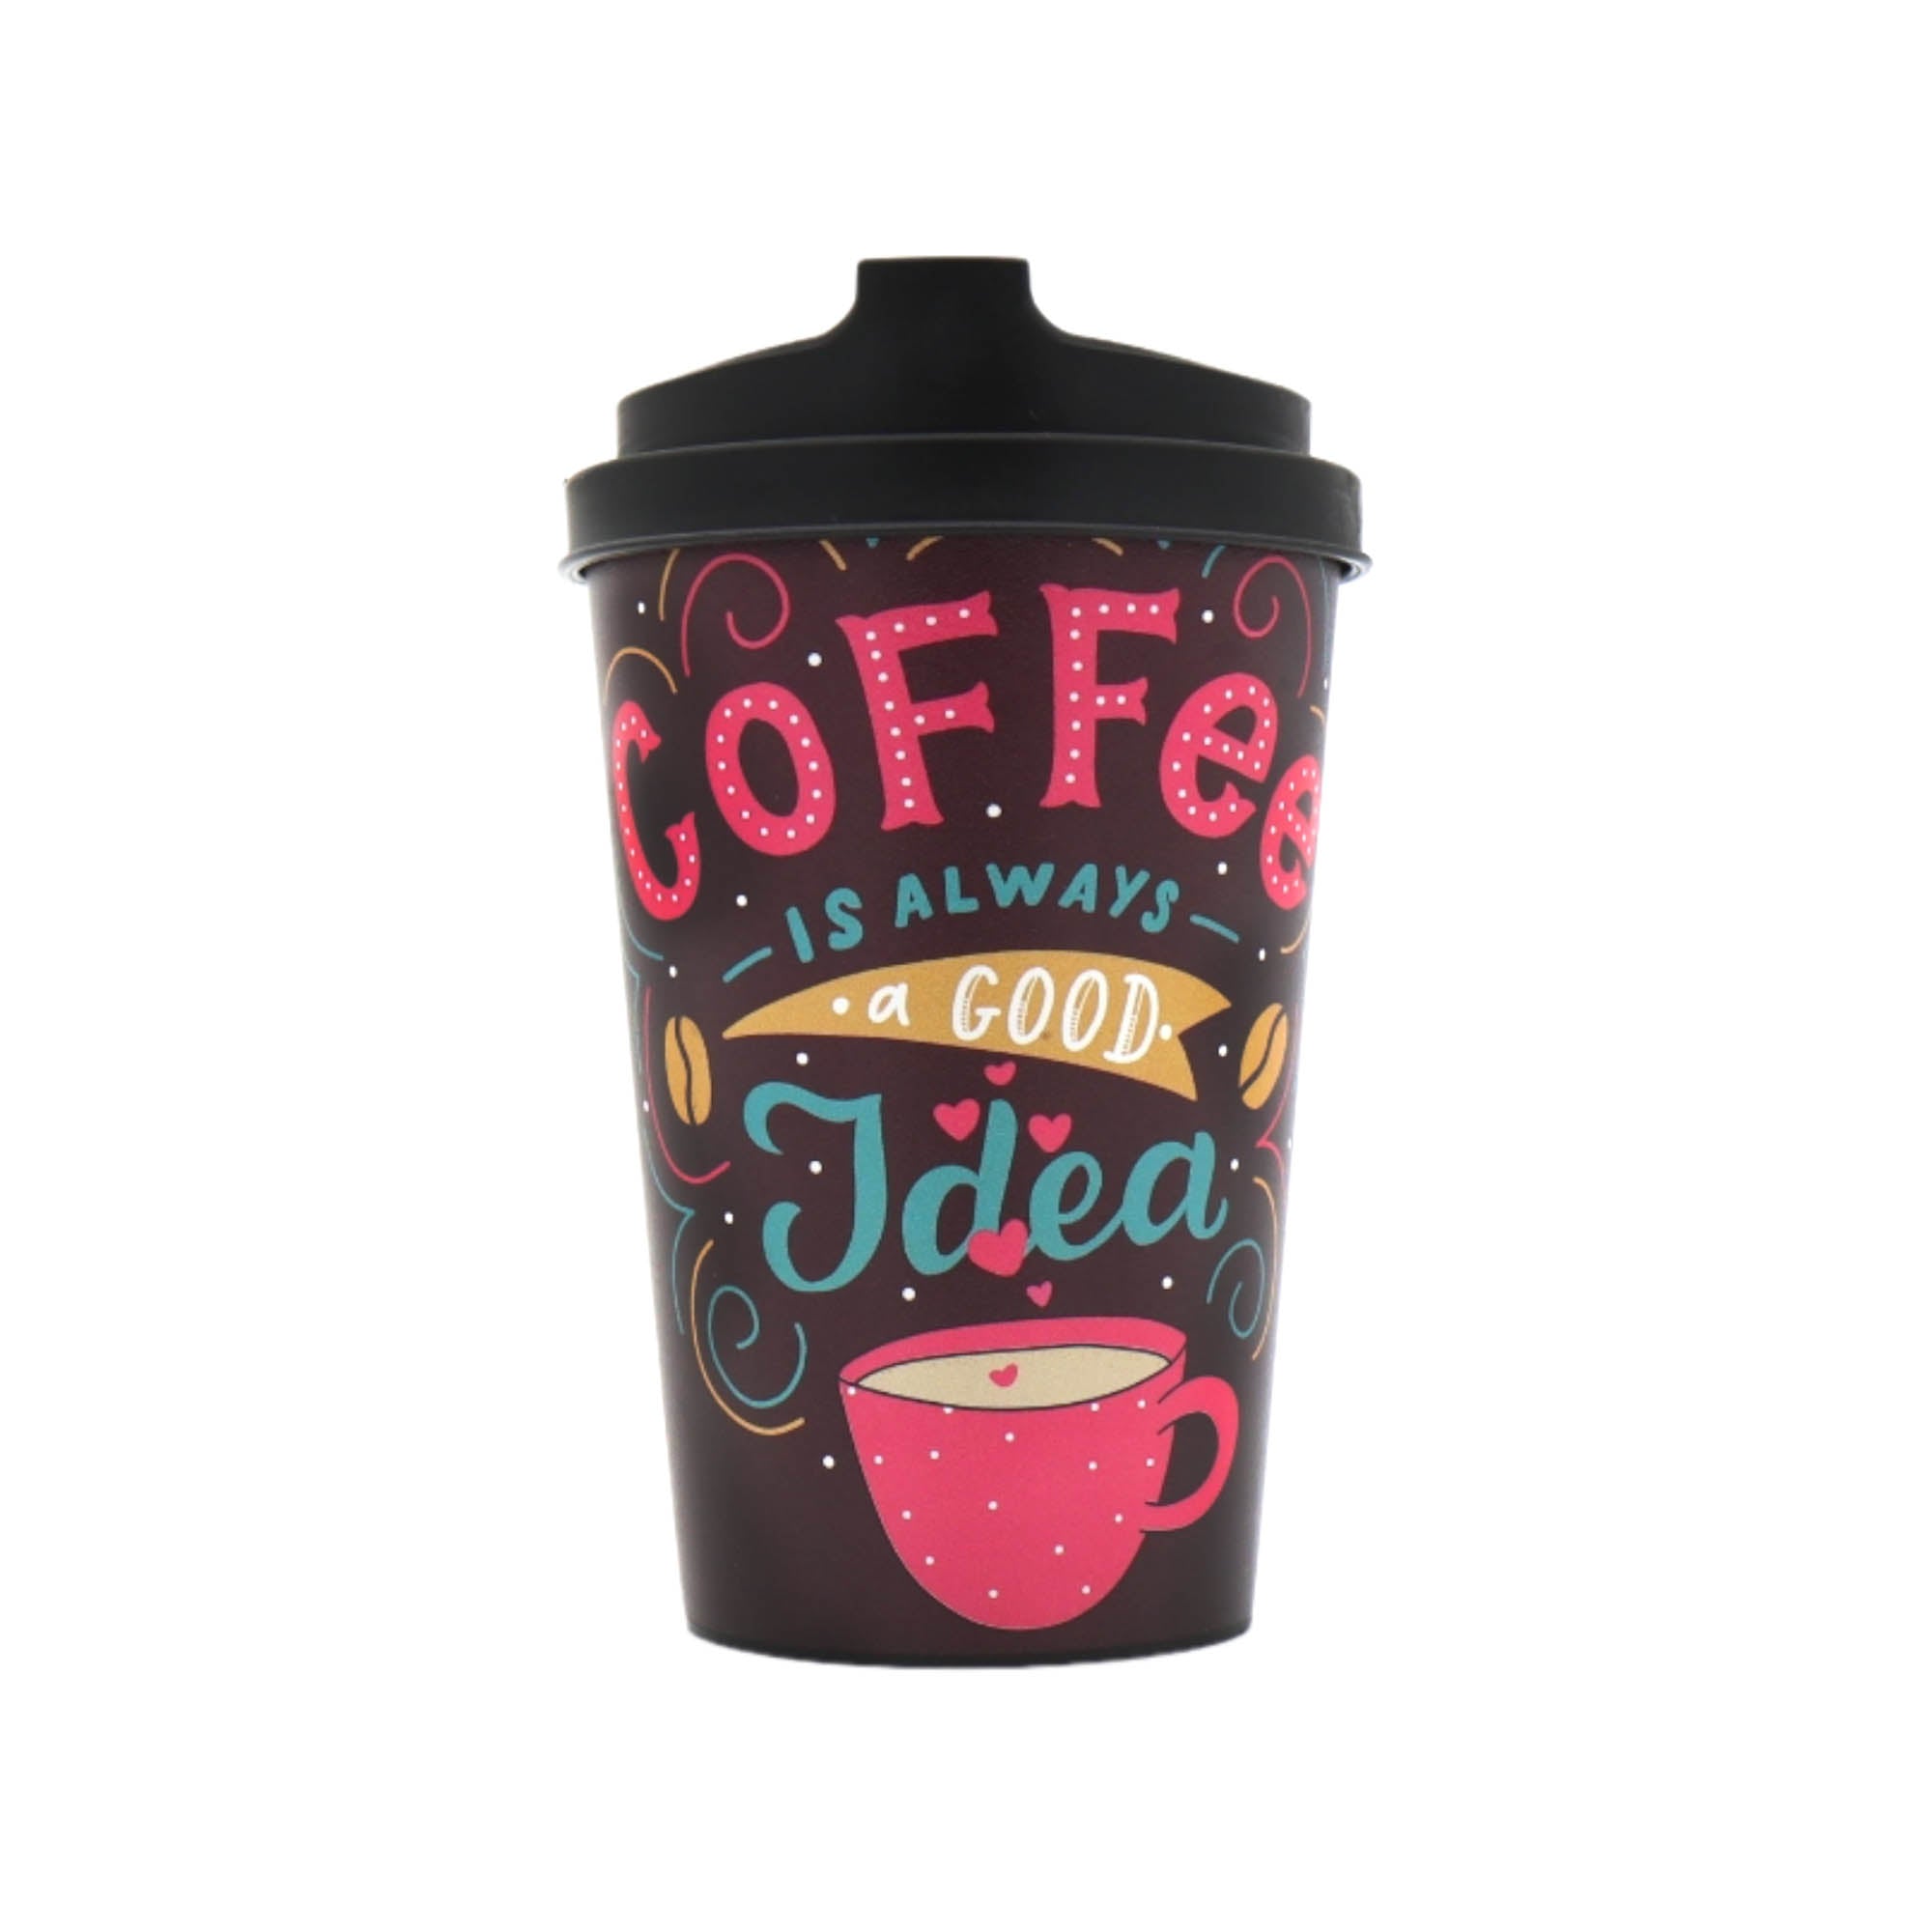 Reusable Takeaway Coffee Cup 340ml Idea Design